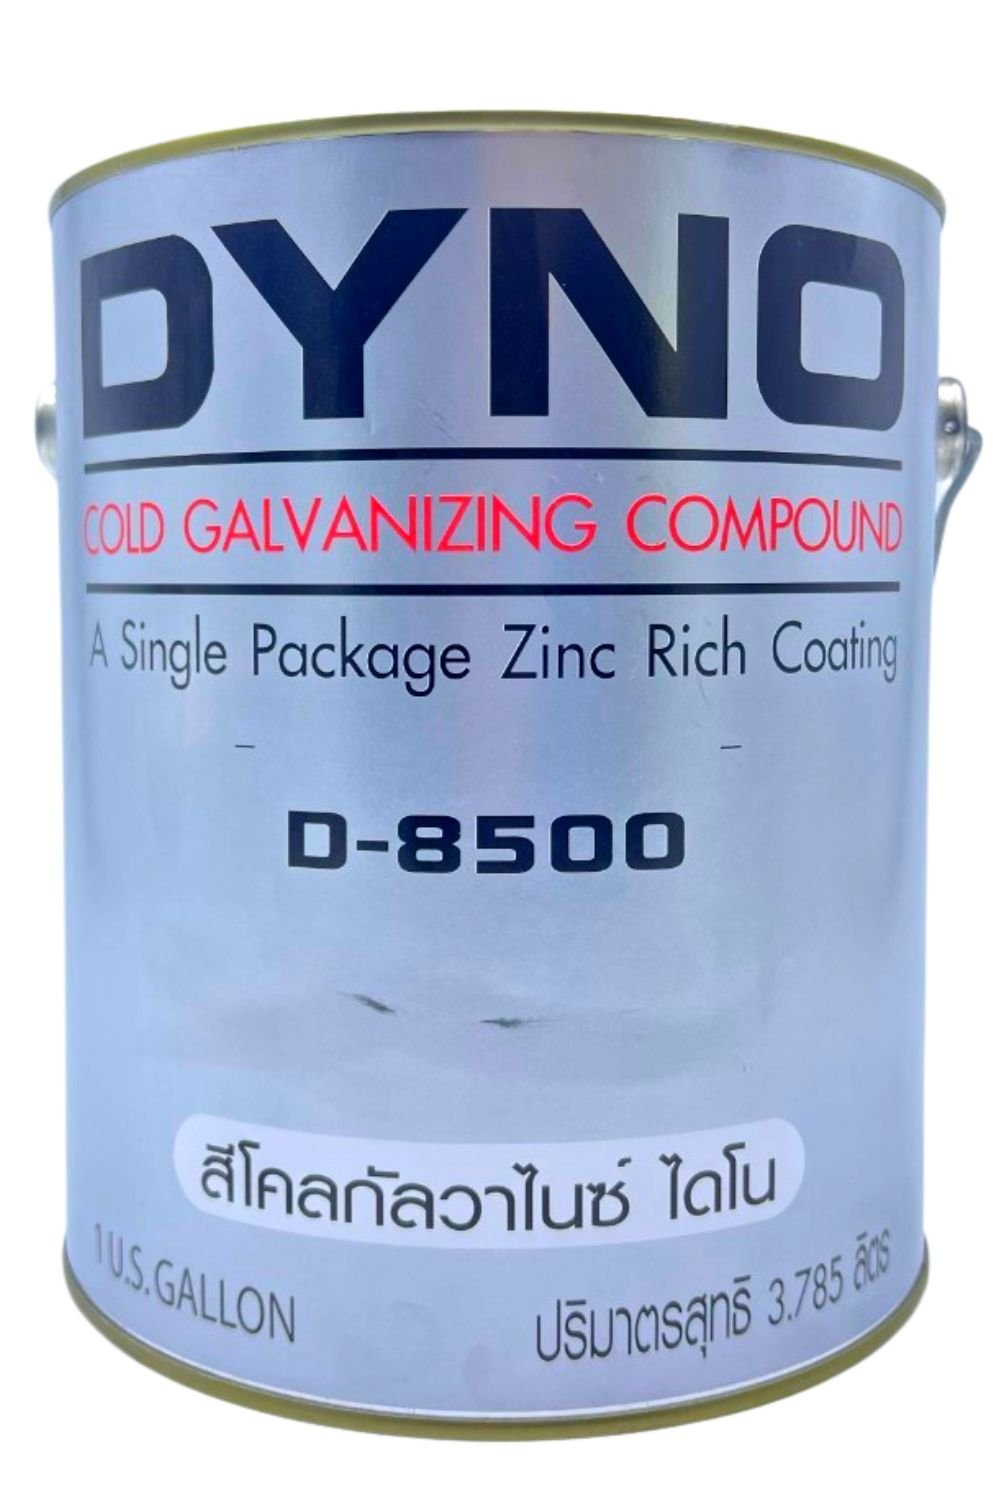 DYNO D-8500 COLD GALVANIZING